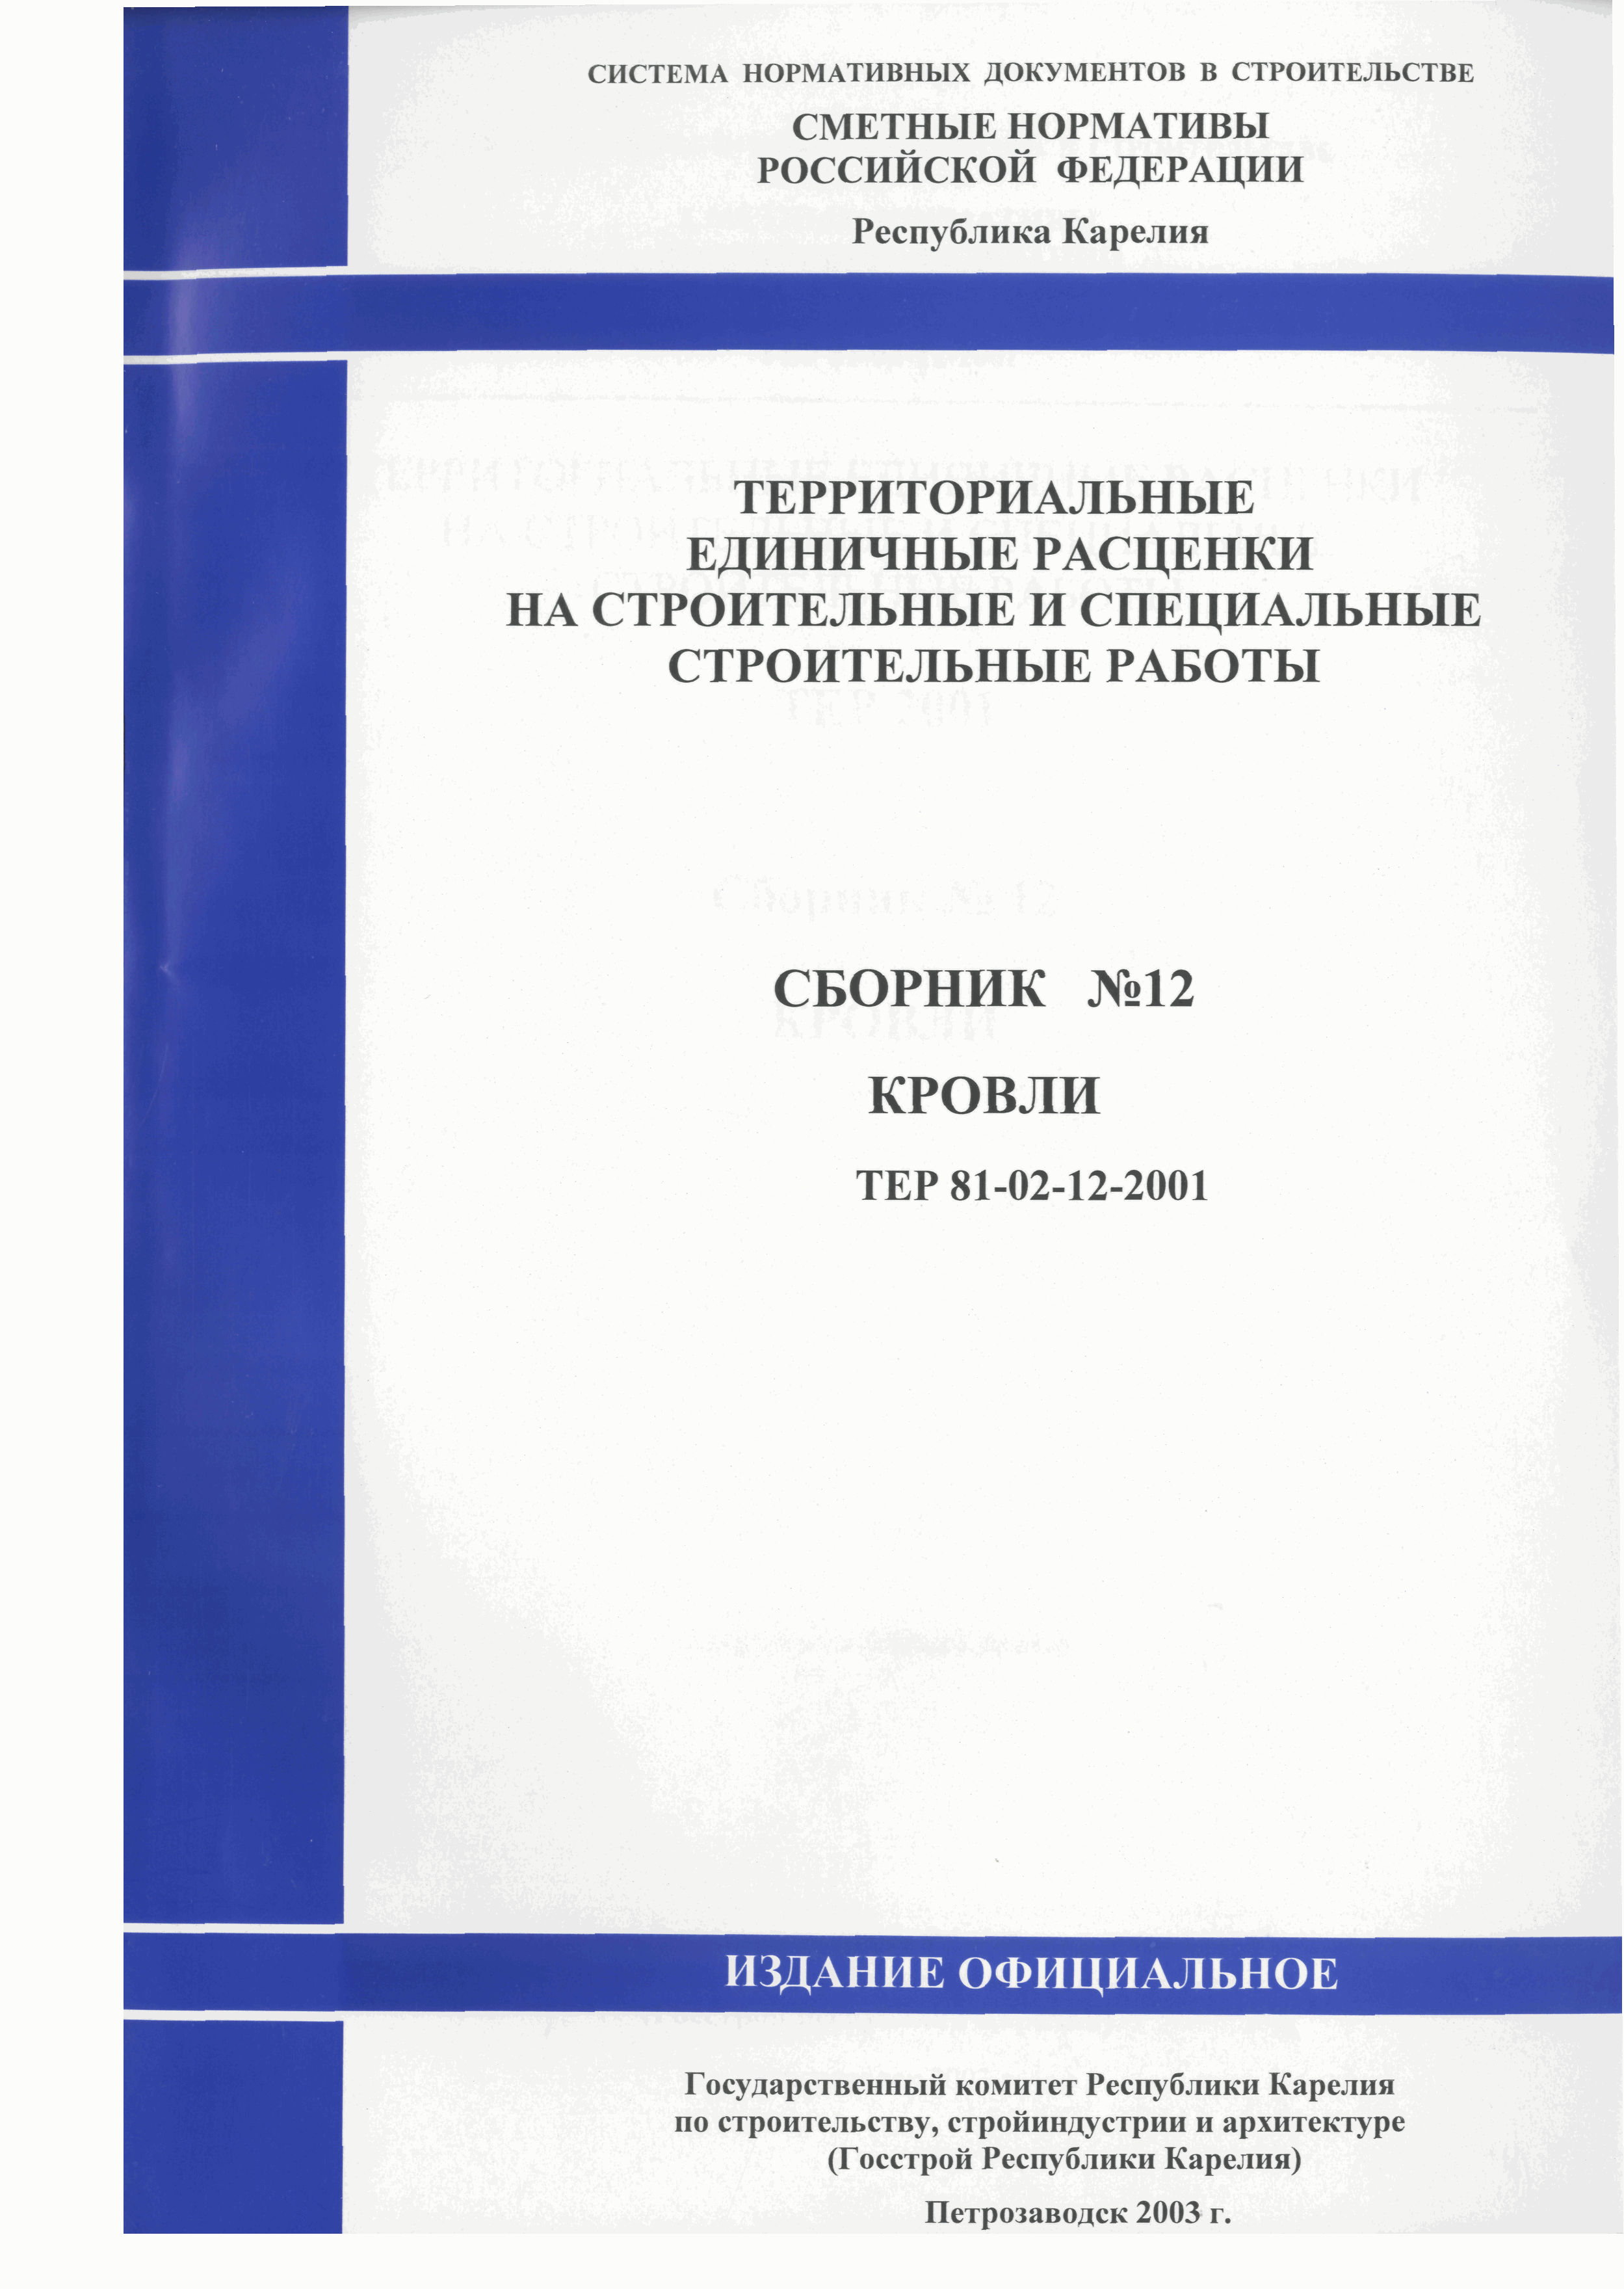 ТЕР Республика Карелия 2001-12